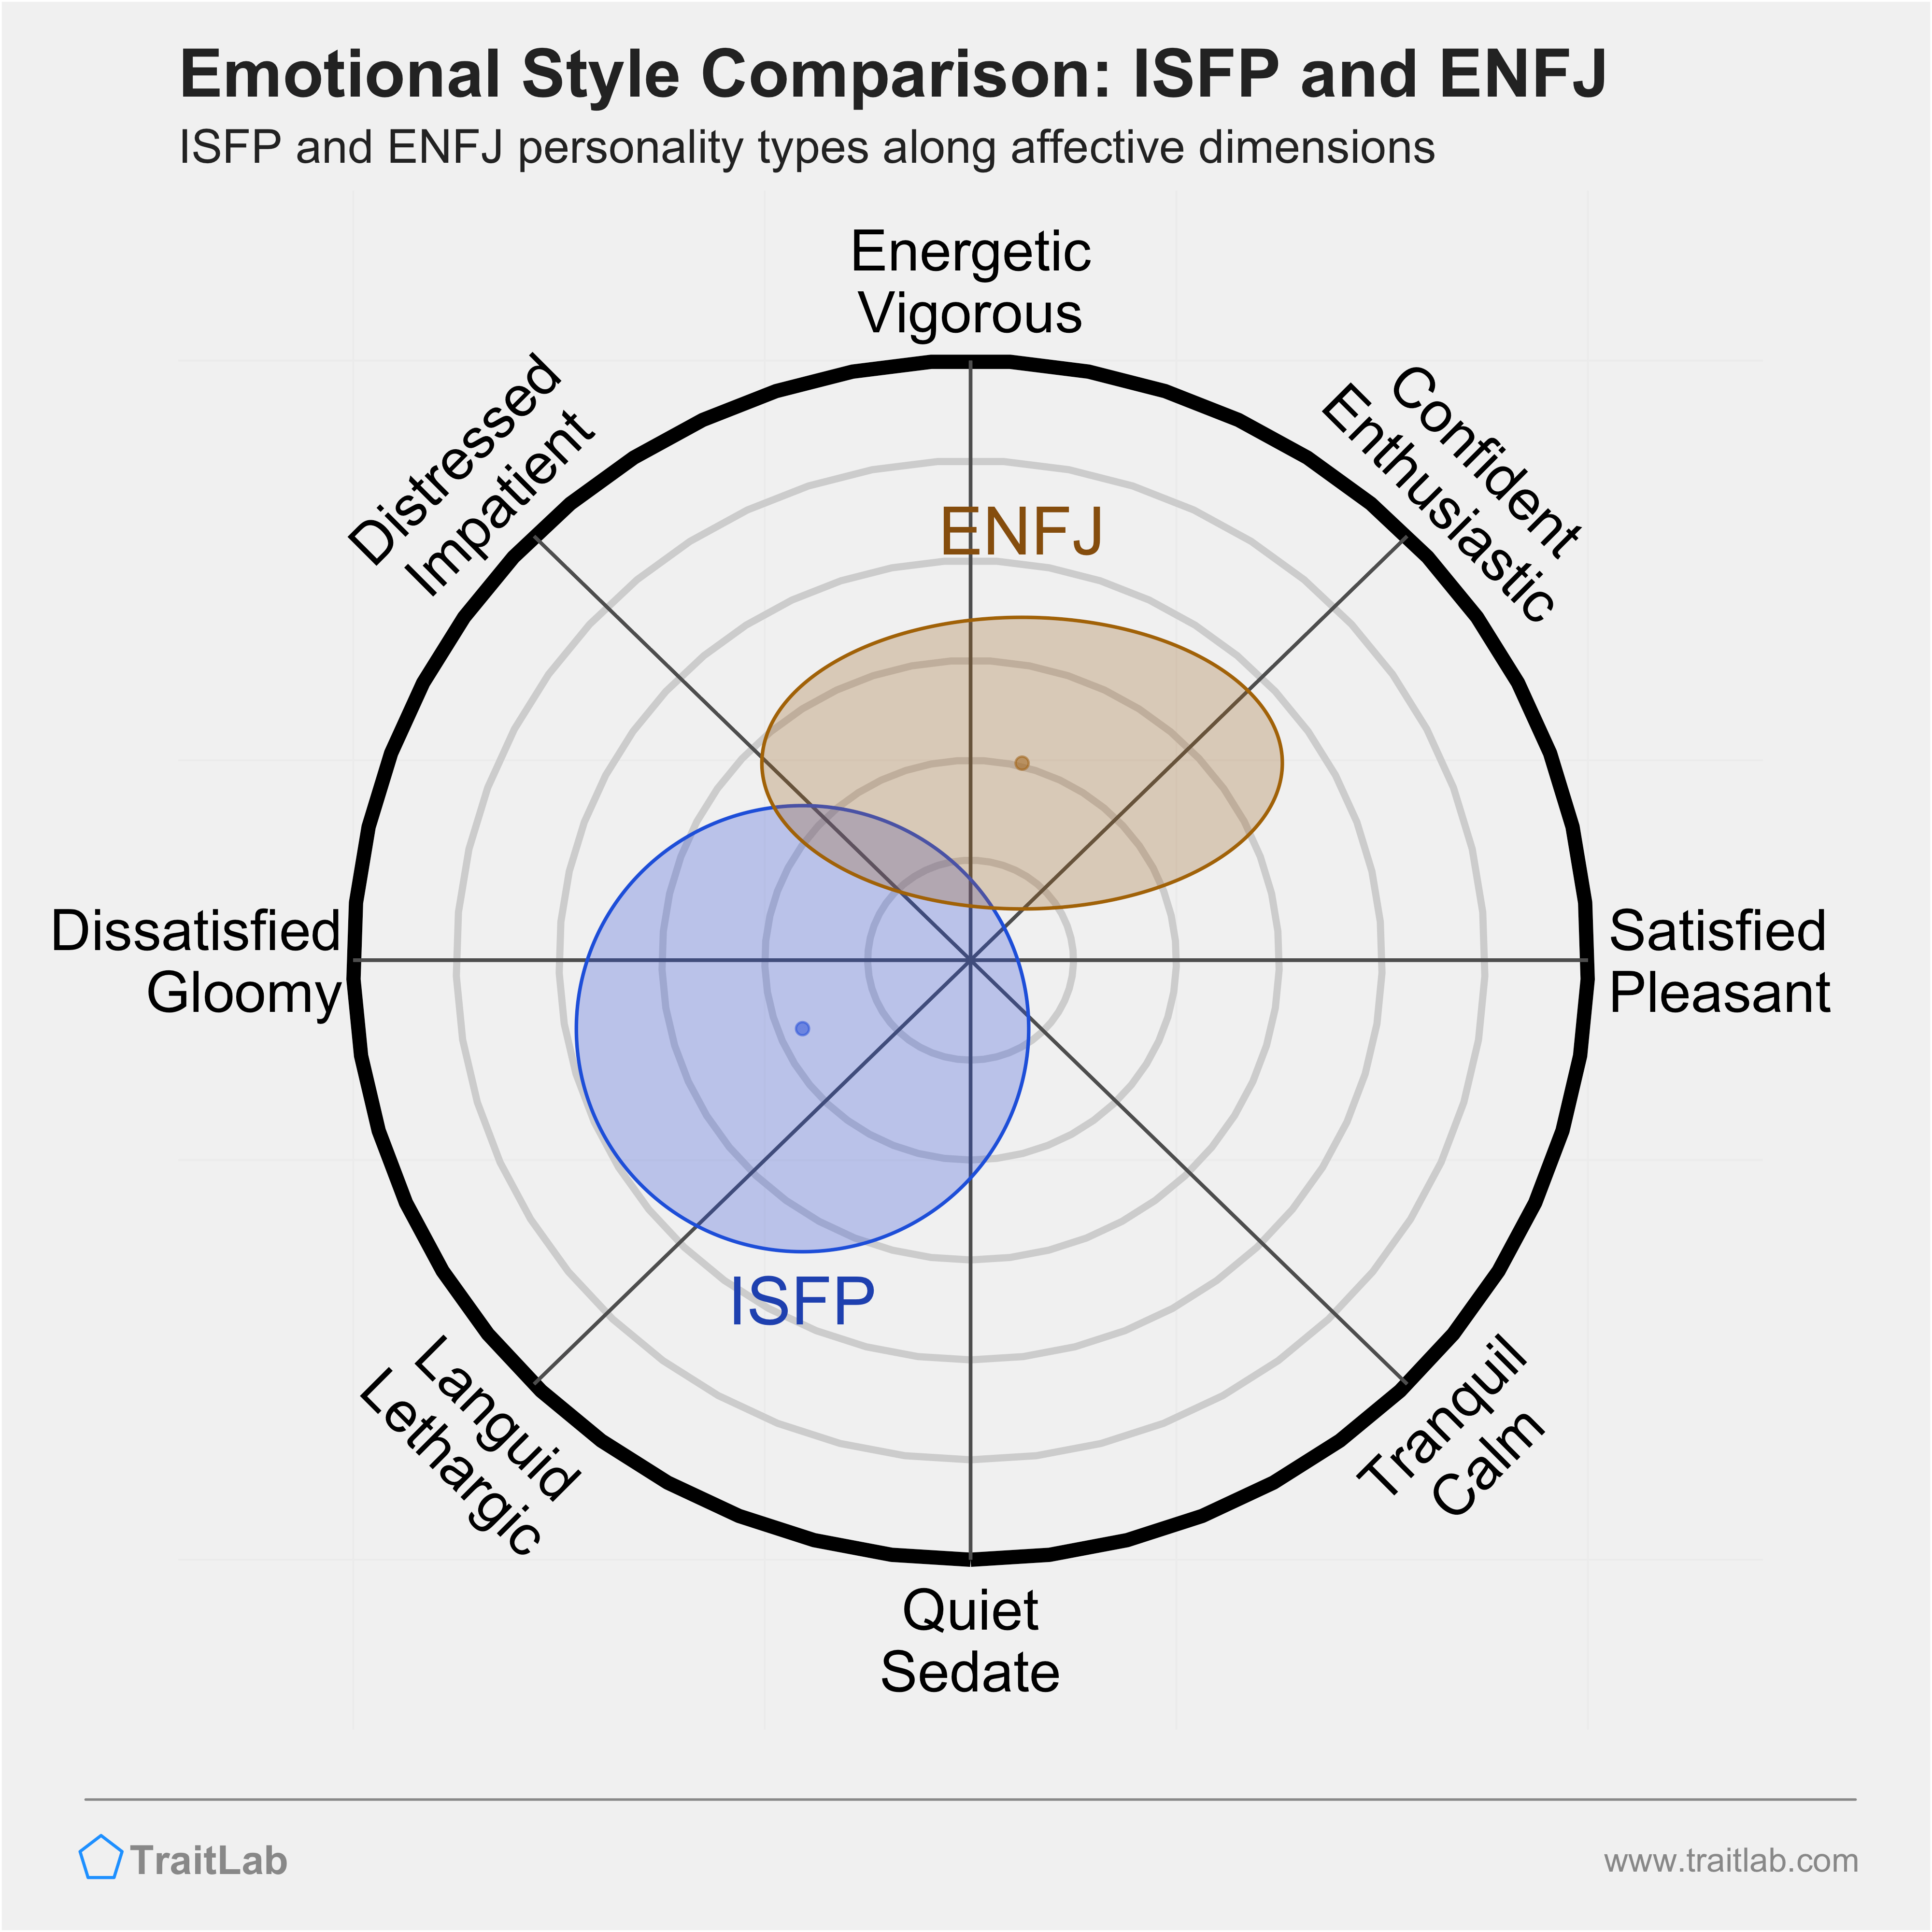 ISFP and ENFJ comparison across emotional (affective) dimensions